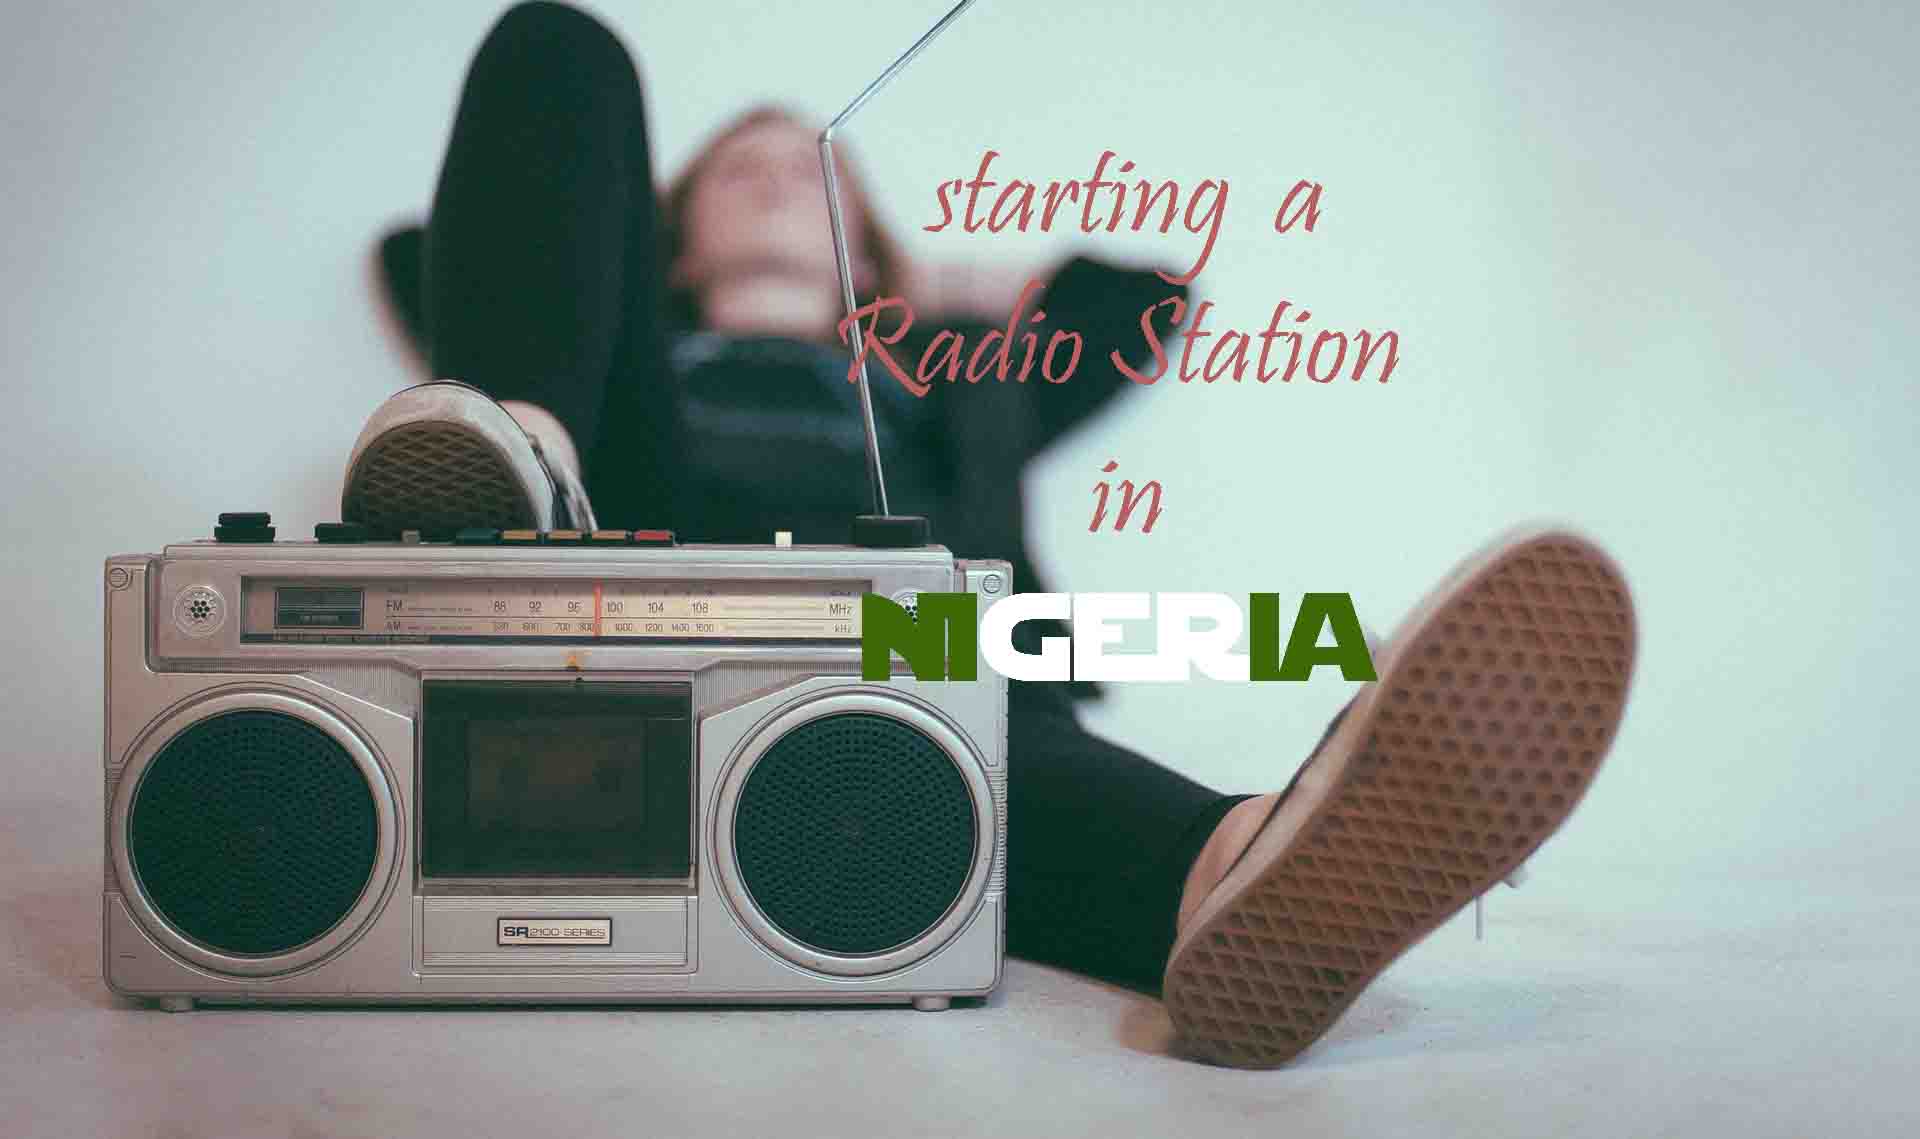 Starting a radio station in Nigeria